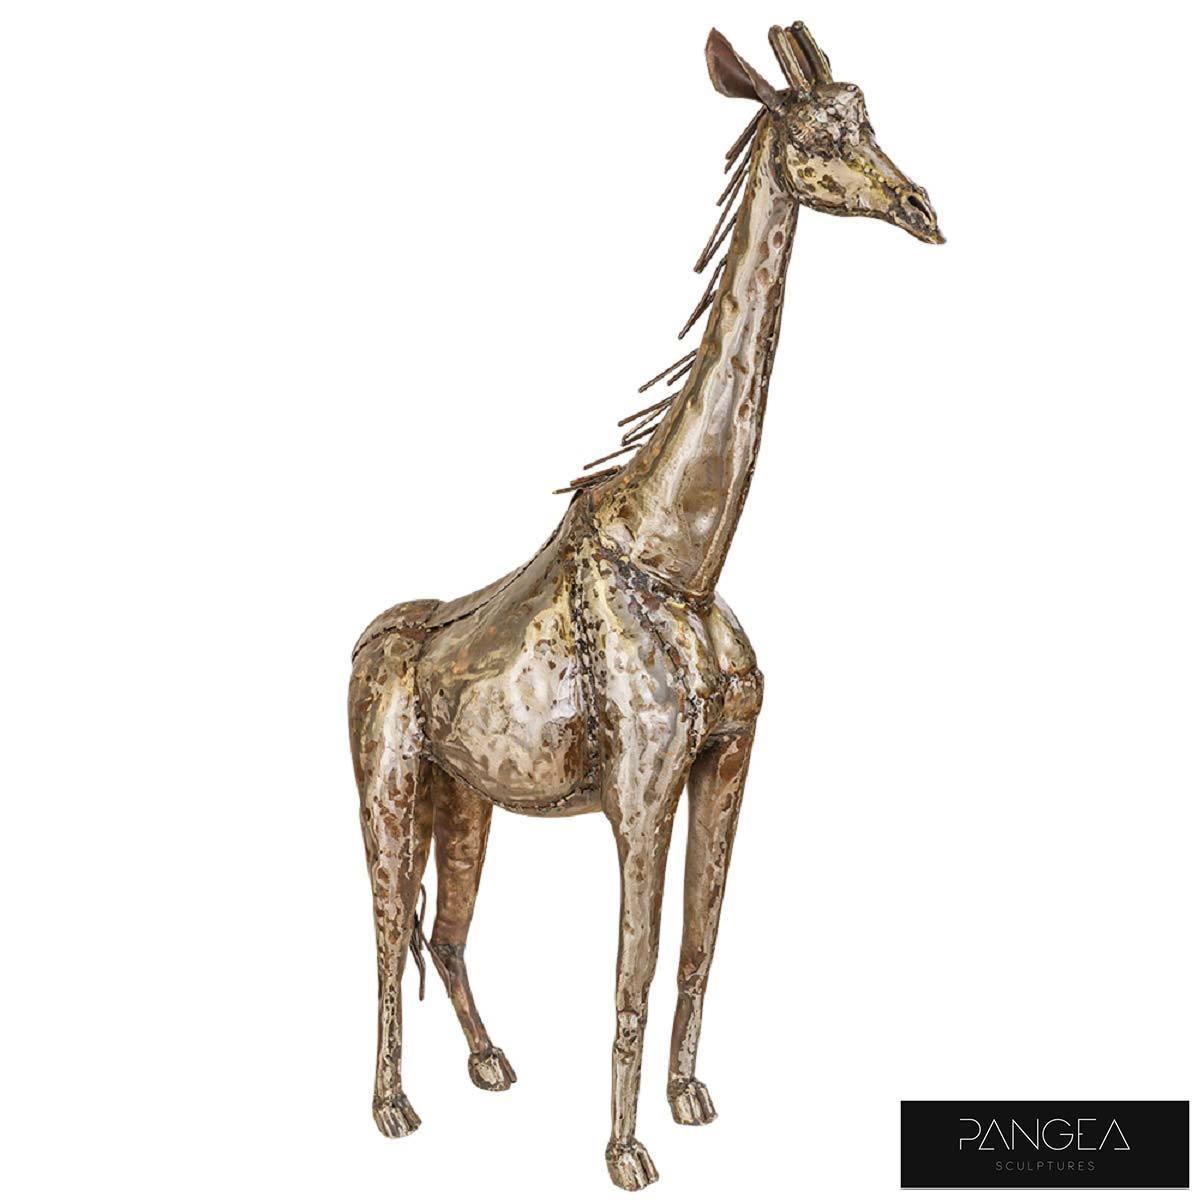 Pangea 2ft 5" (73cm) Giraffe Ornamental Metal Structure - Baby